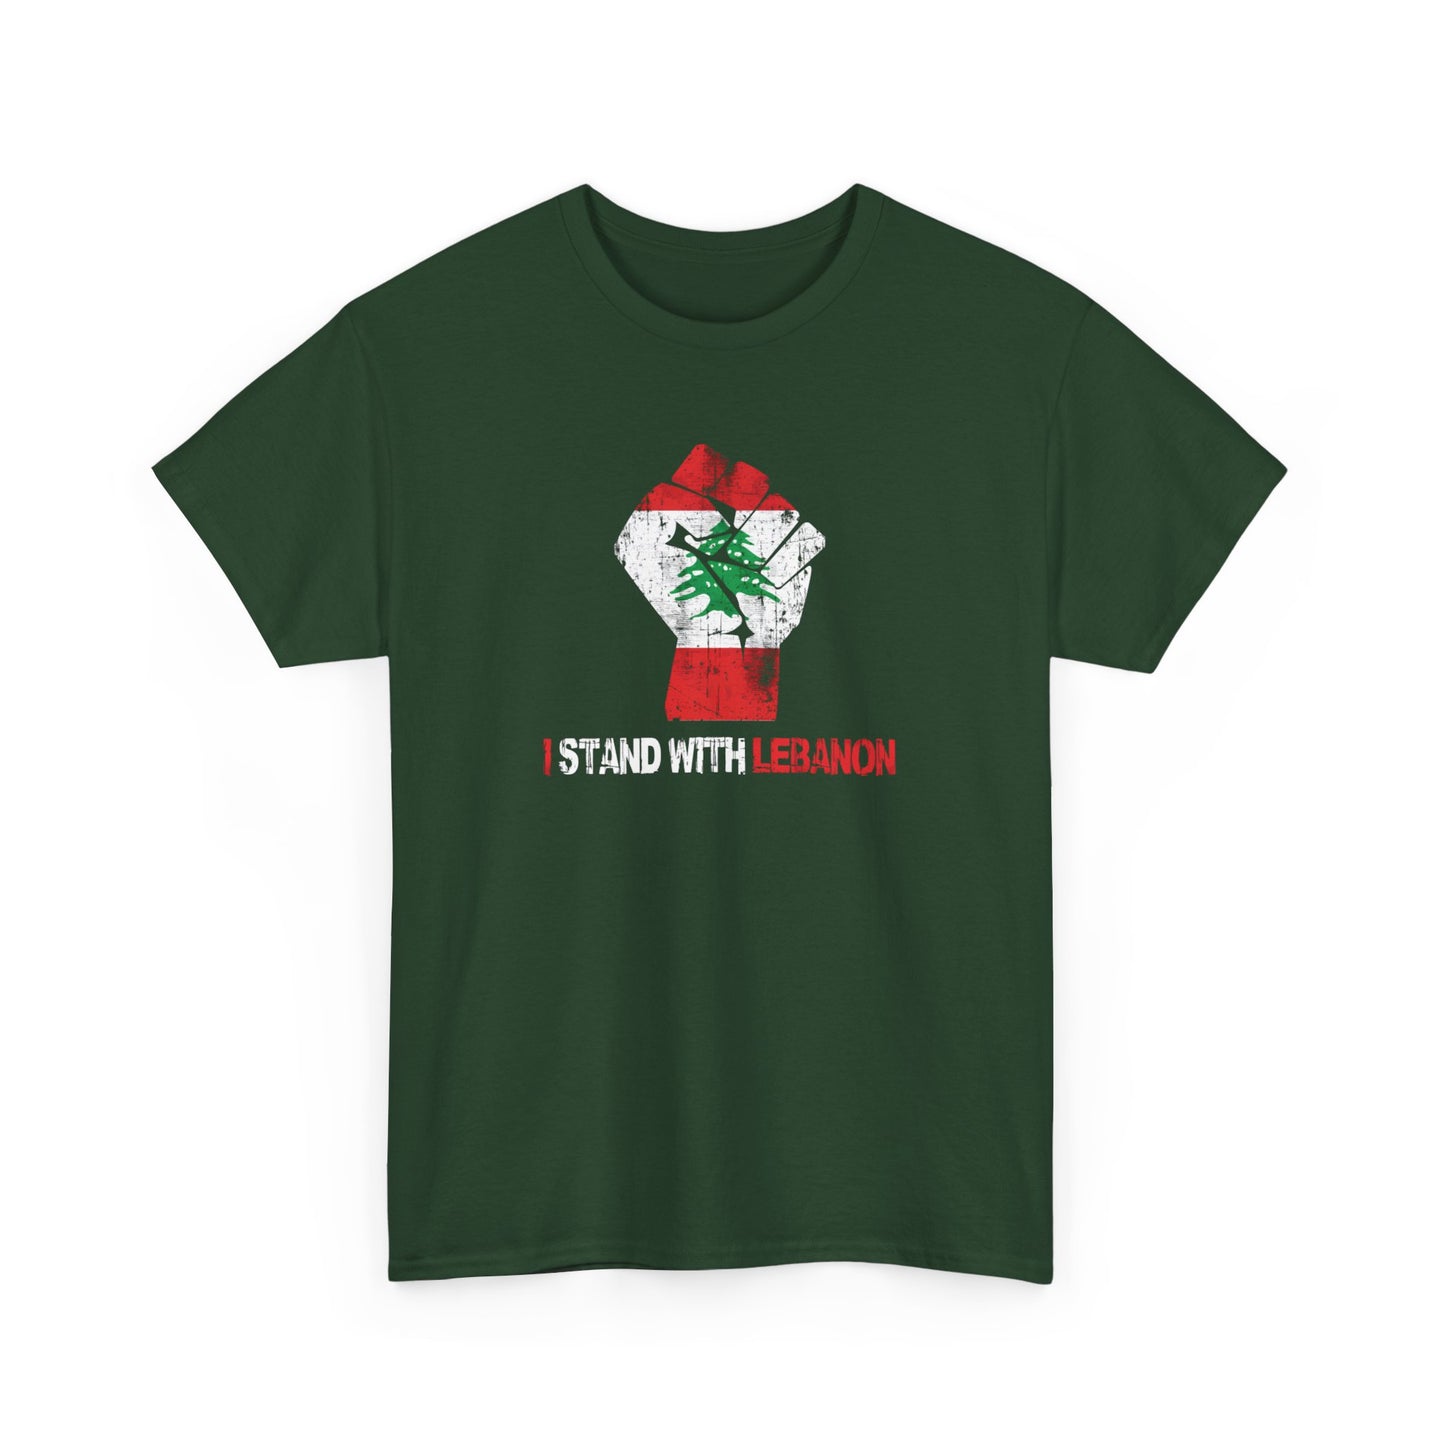 "I Stand With Lebanon" Premium Cotton Tee